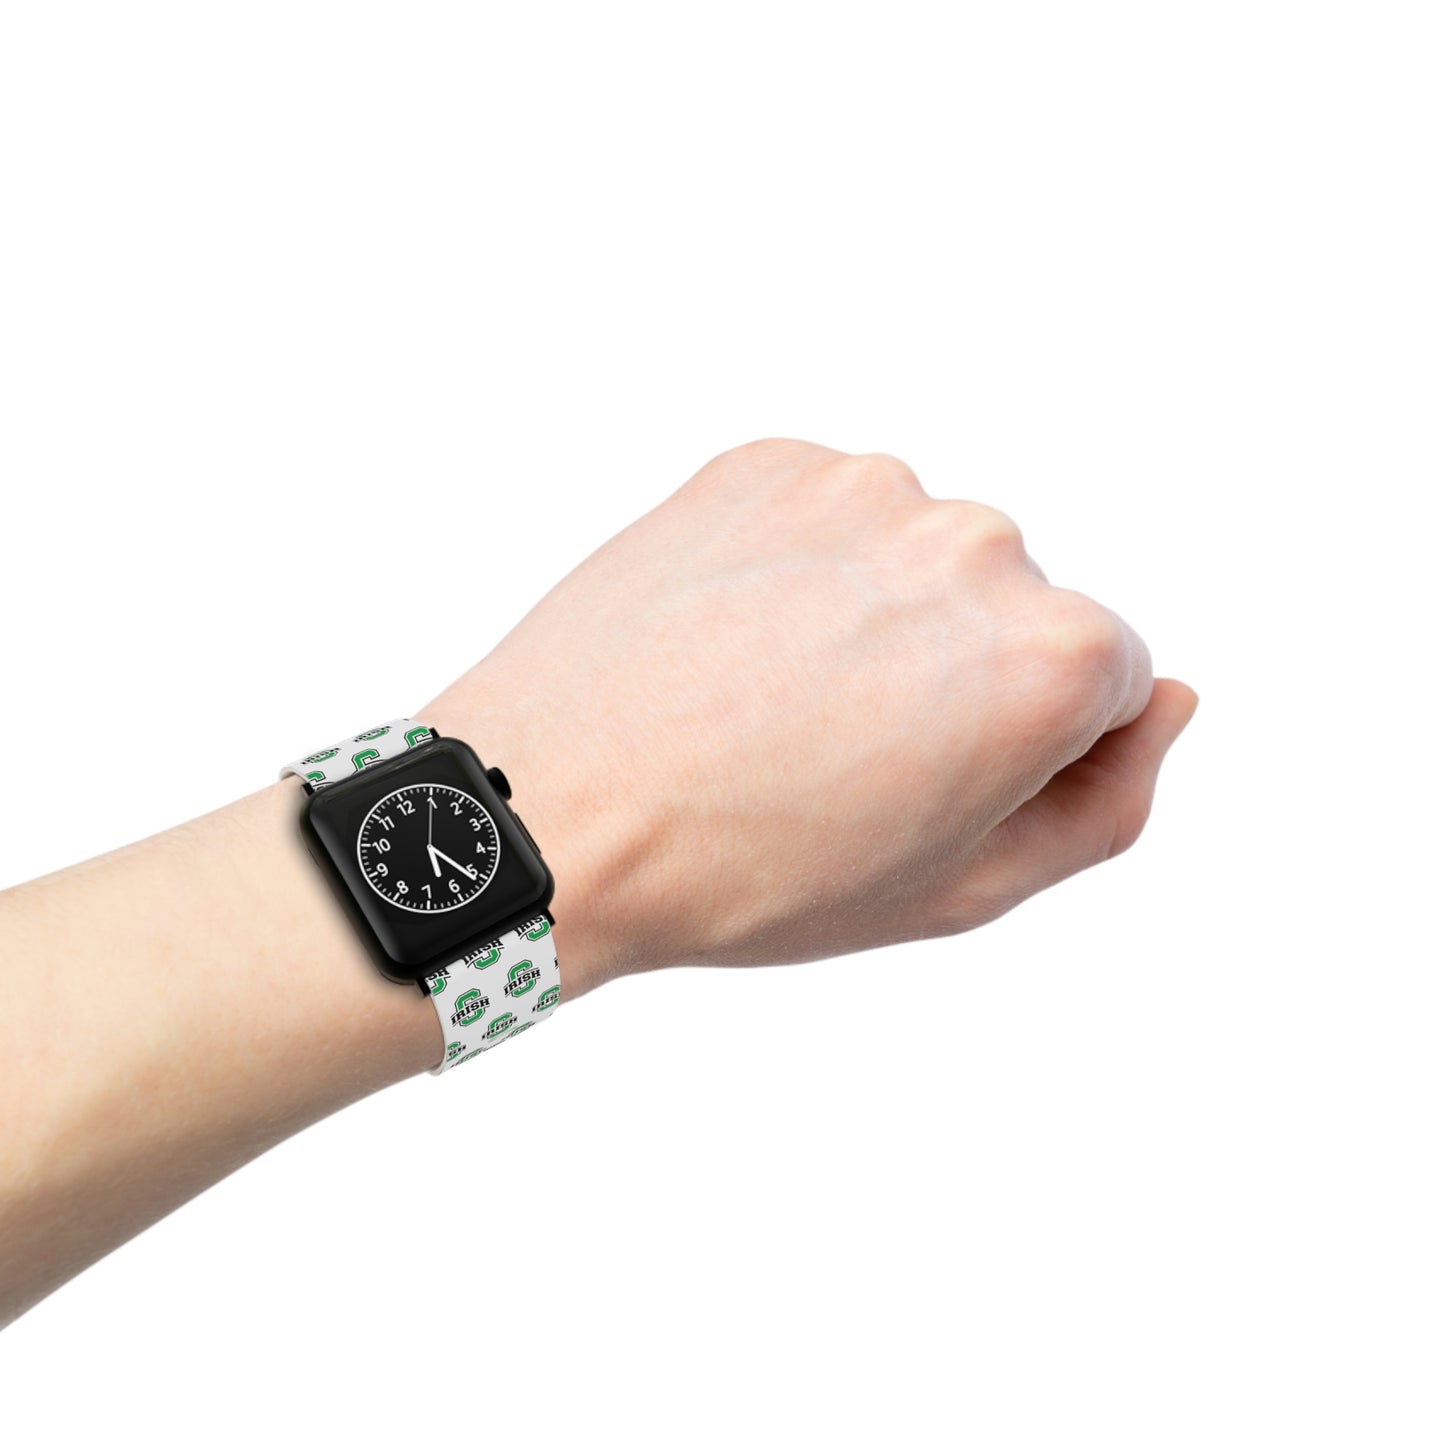 SCIOTO IRISH LOGO-Watch Band for Apple Watch